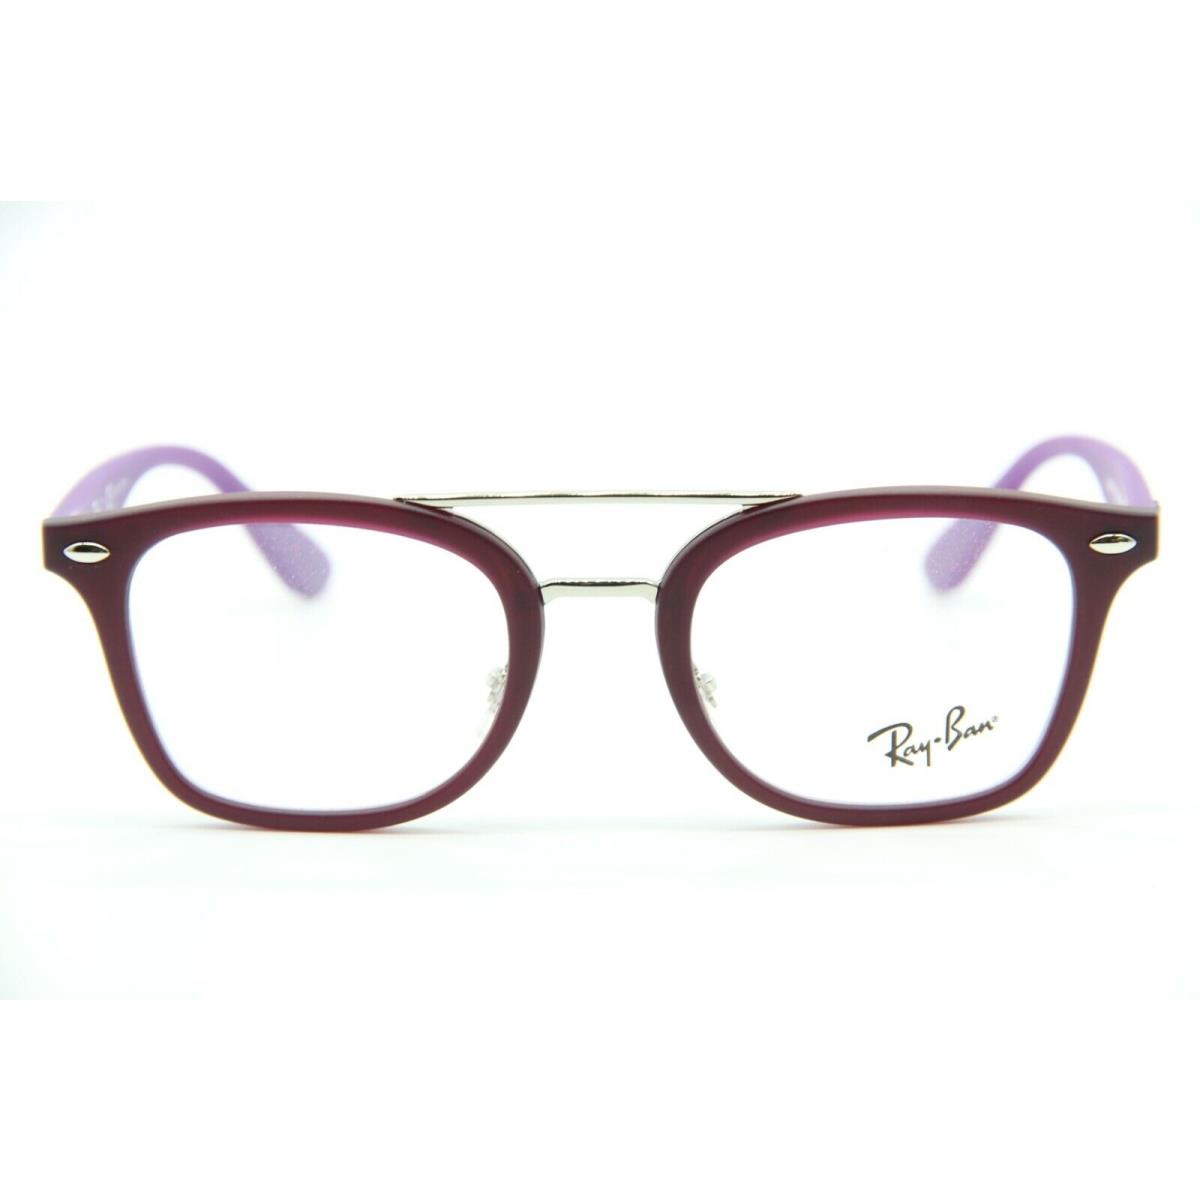 Ray-Ban eyeglasses  - PURPLE Frame 0